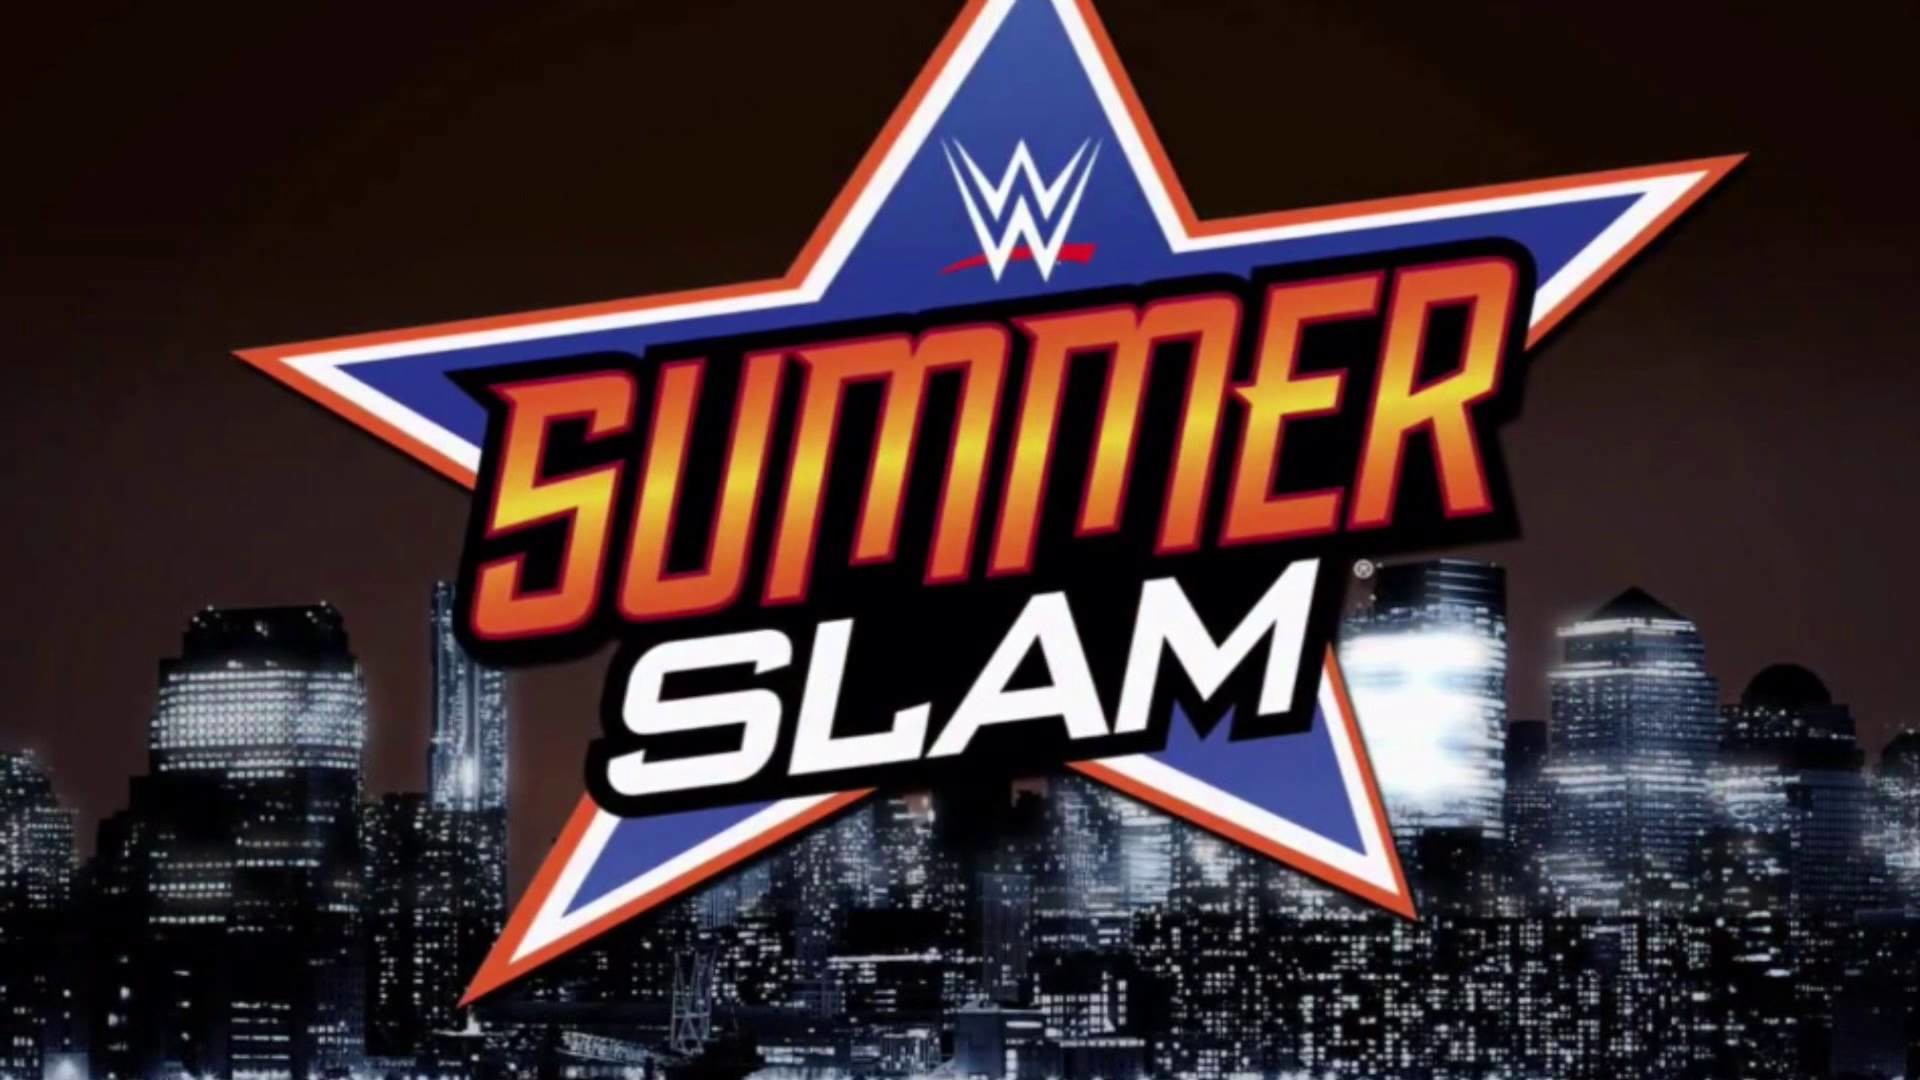 1920x1080 Location Announced For WWE SummerSlam 2018, Wade Barrett Gets Nexus Cup